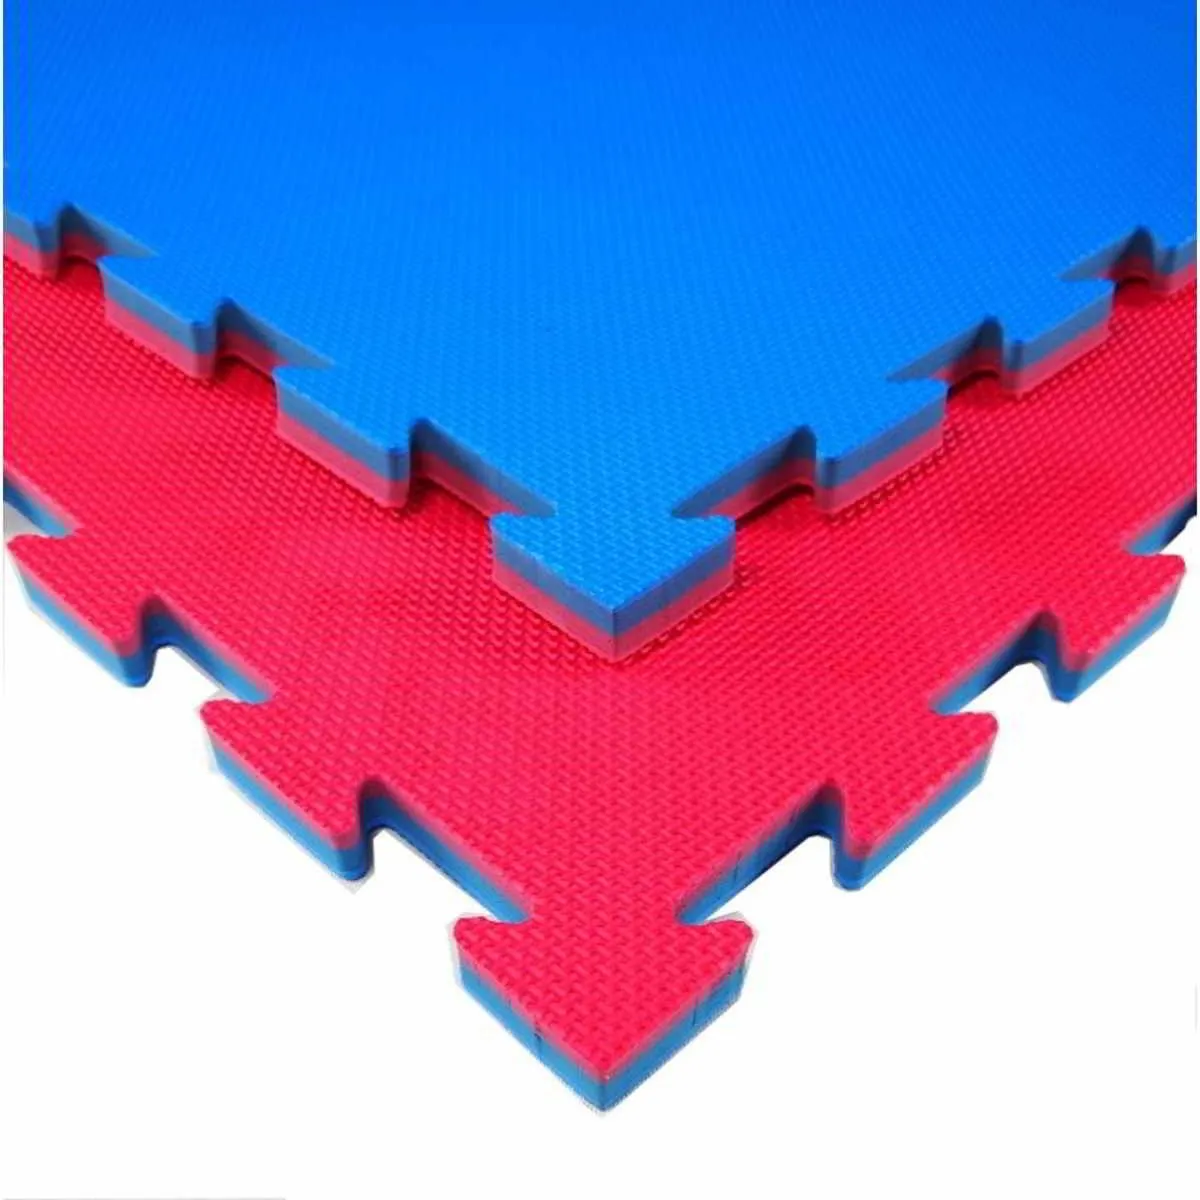 Kampsportsmåtte Tatami E20X blå/rød 100 cm x 100 cm x 2,1 cm